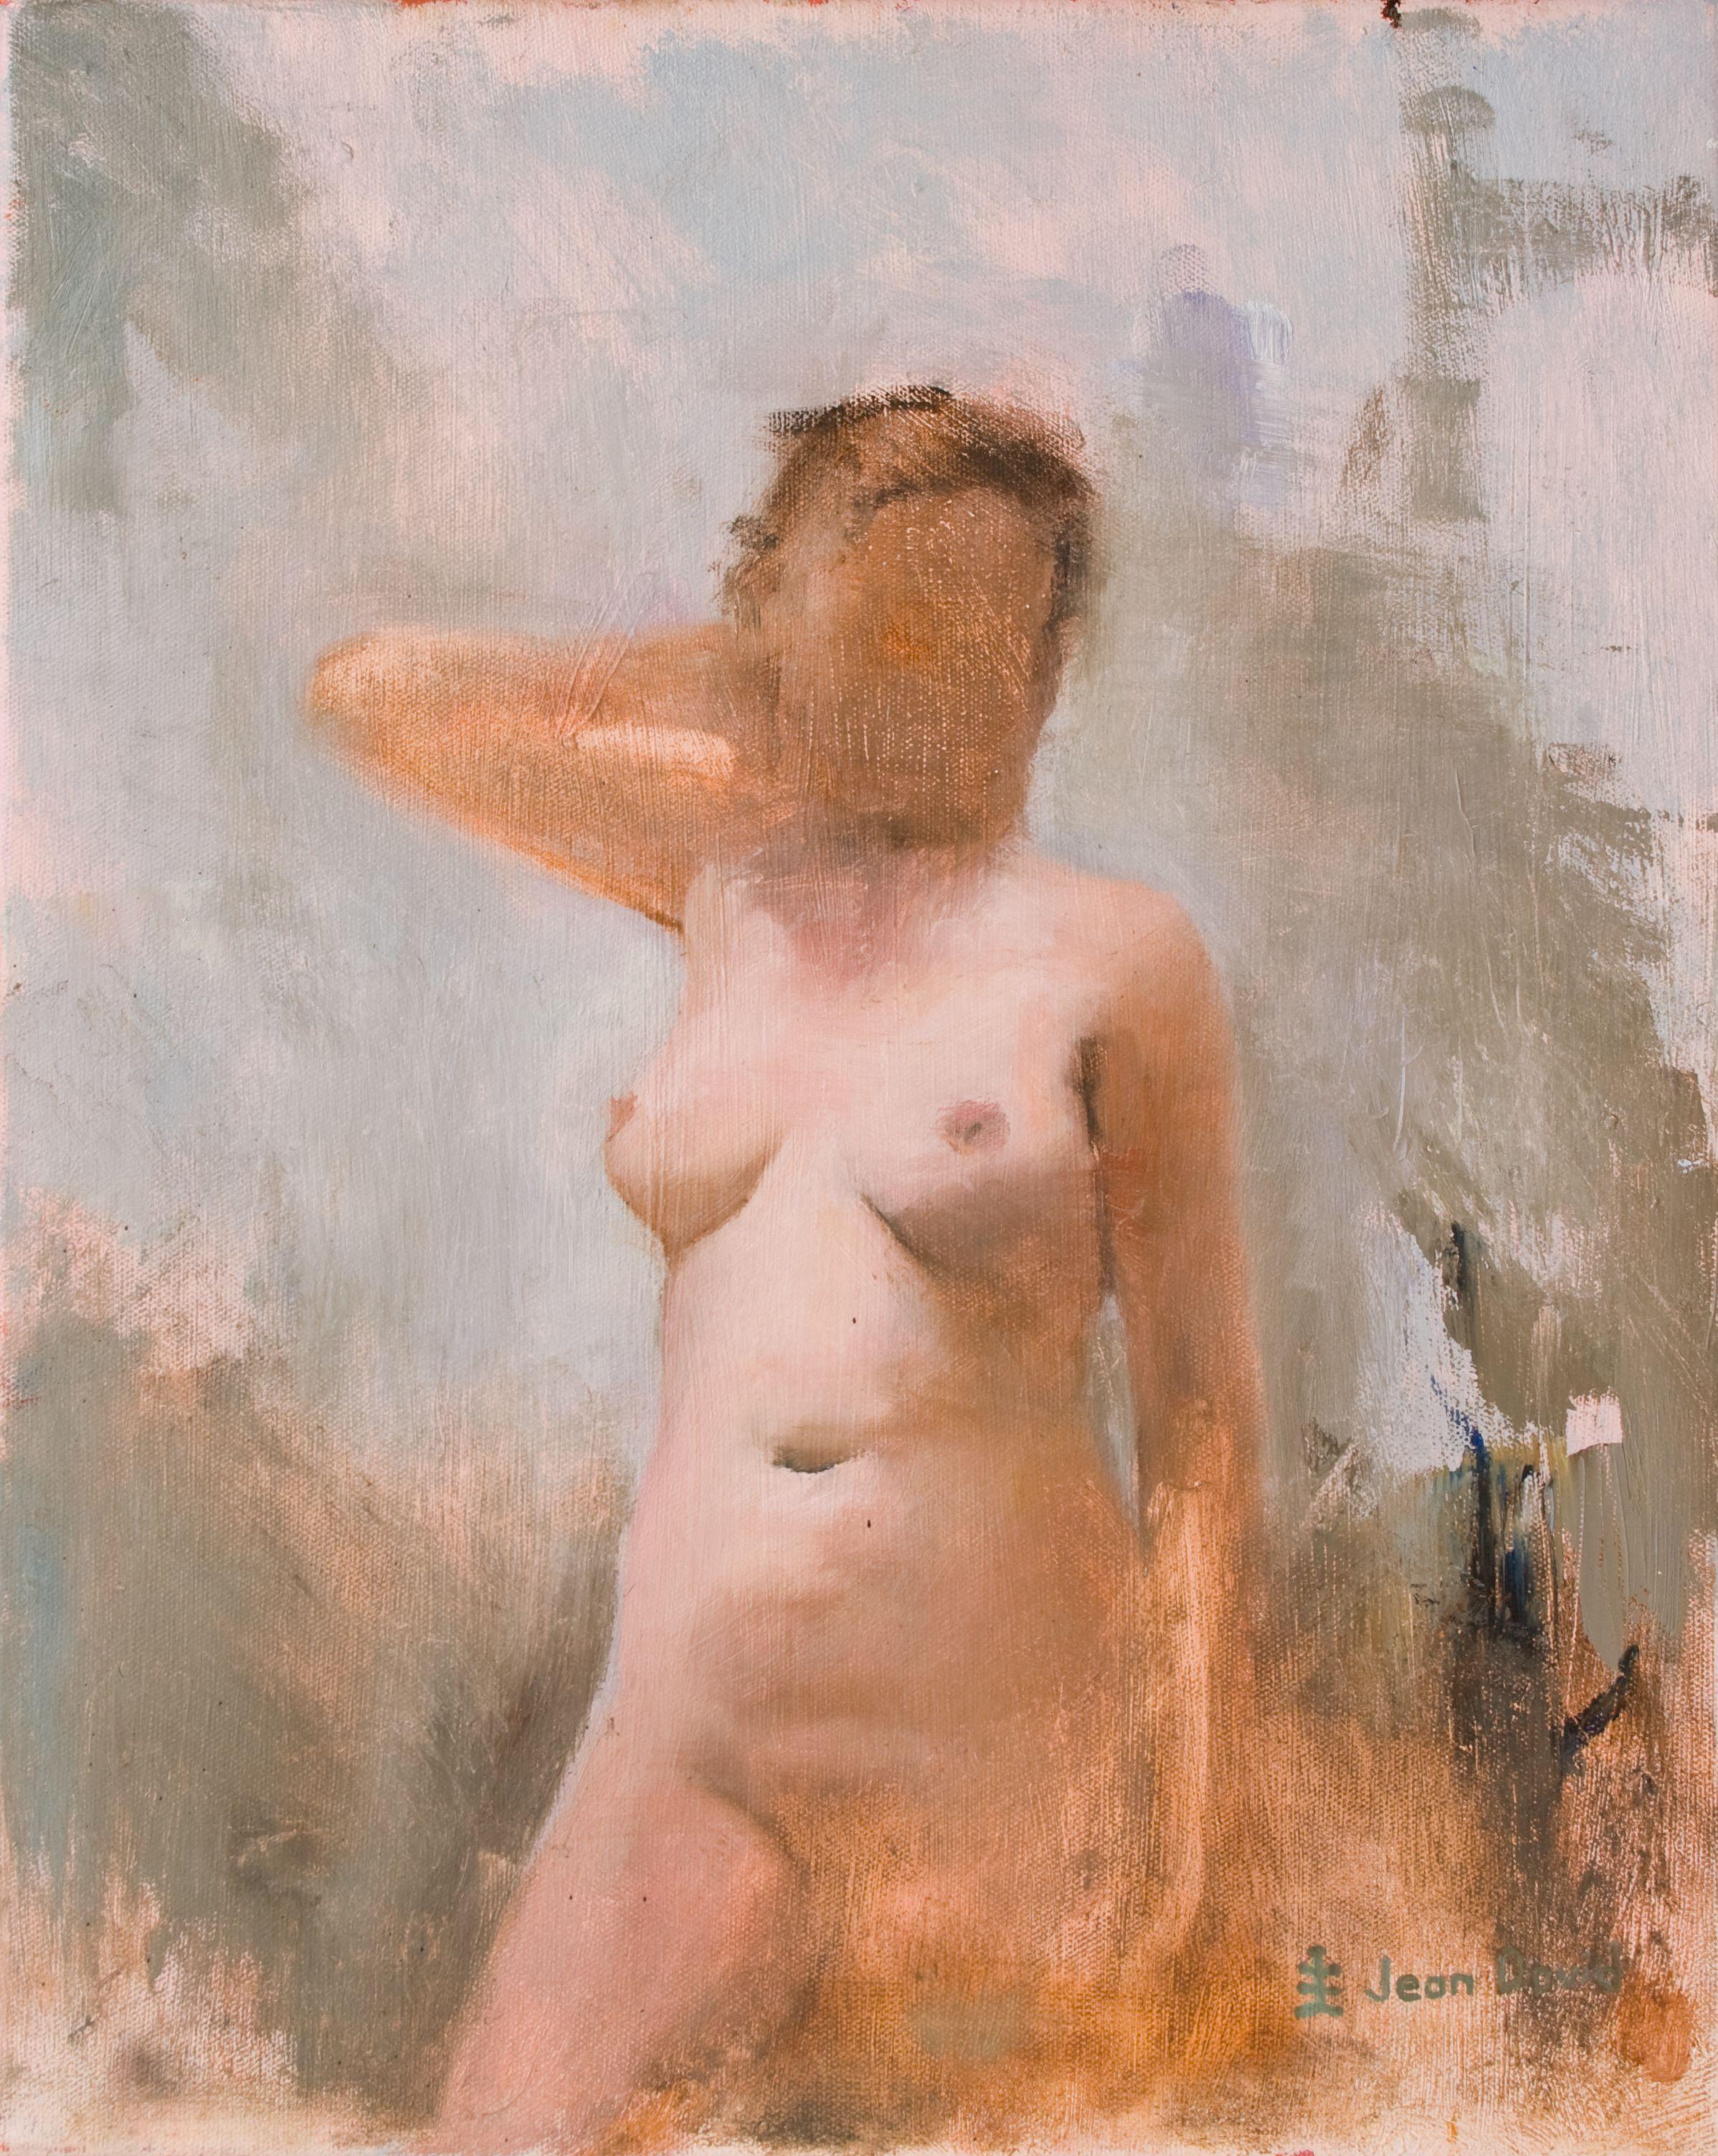 Jean David Nude Painting - Harmony, Painting, Oil on Canvas